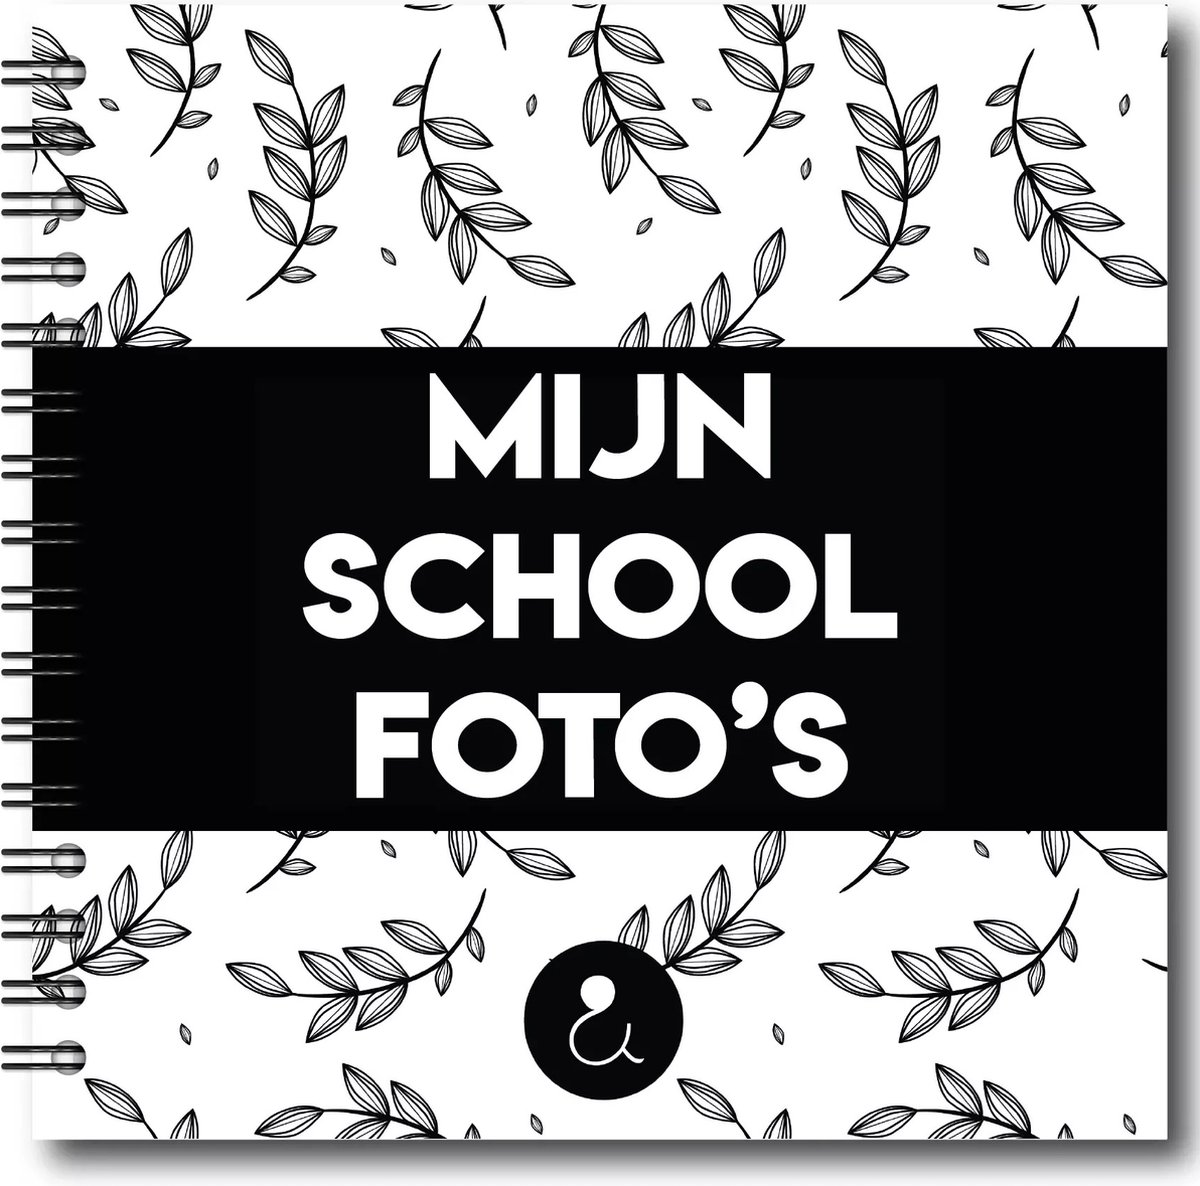 Studio Ins & Outs 'Mijn schoolfoto's' - Mono